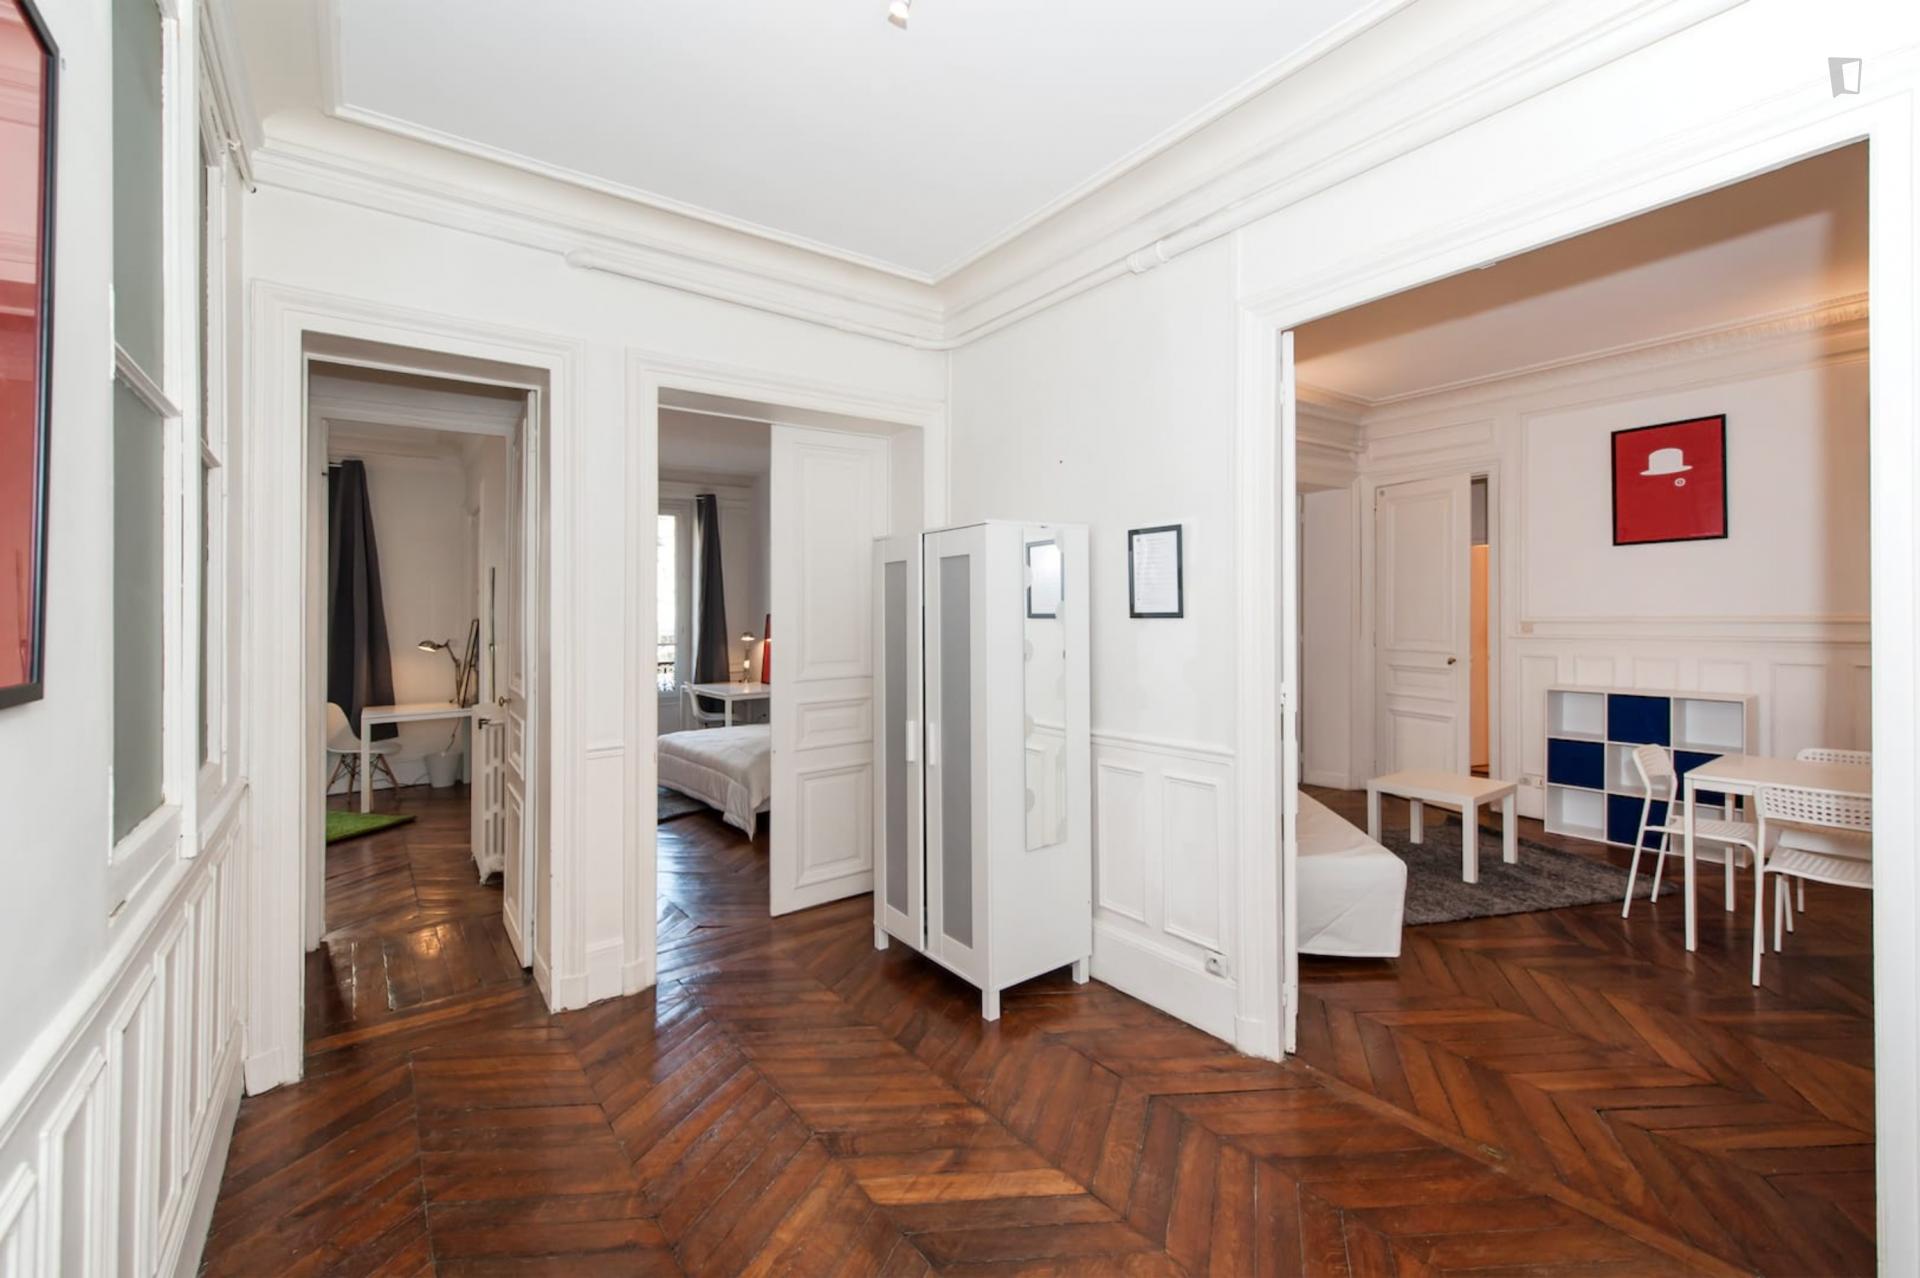 Voltaire - Homely double bedroom in Paris